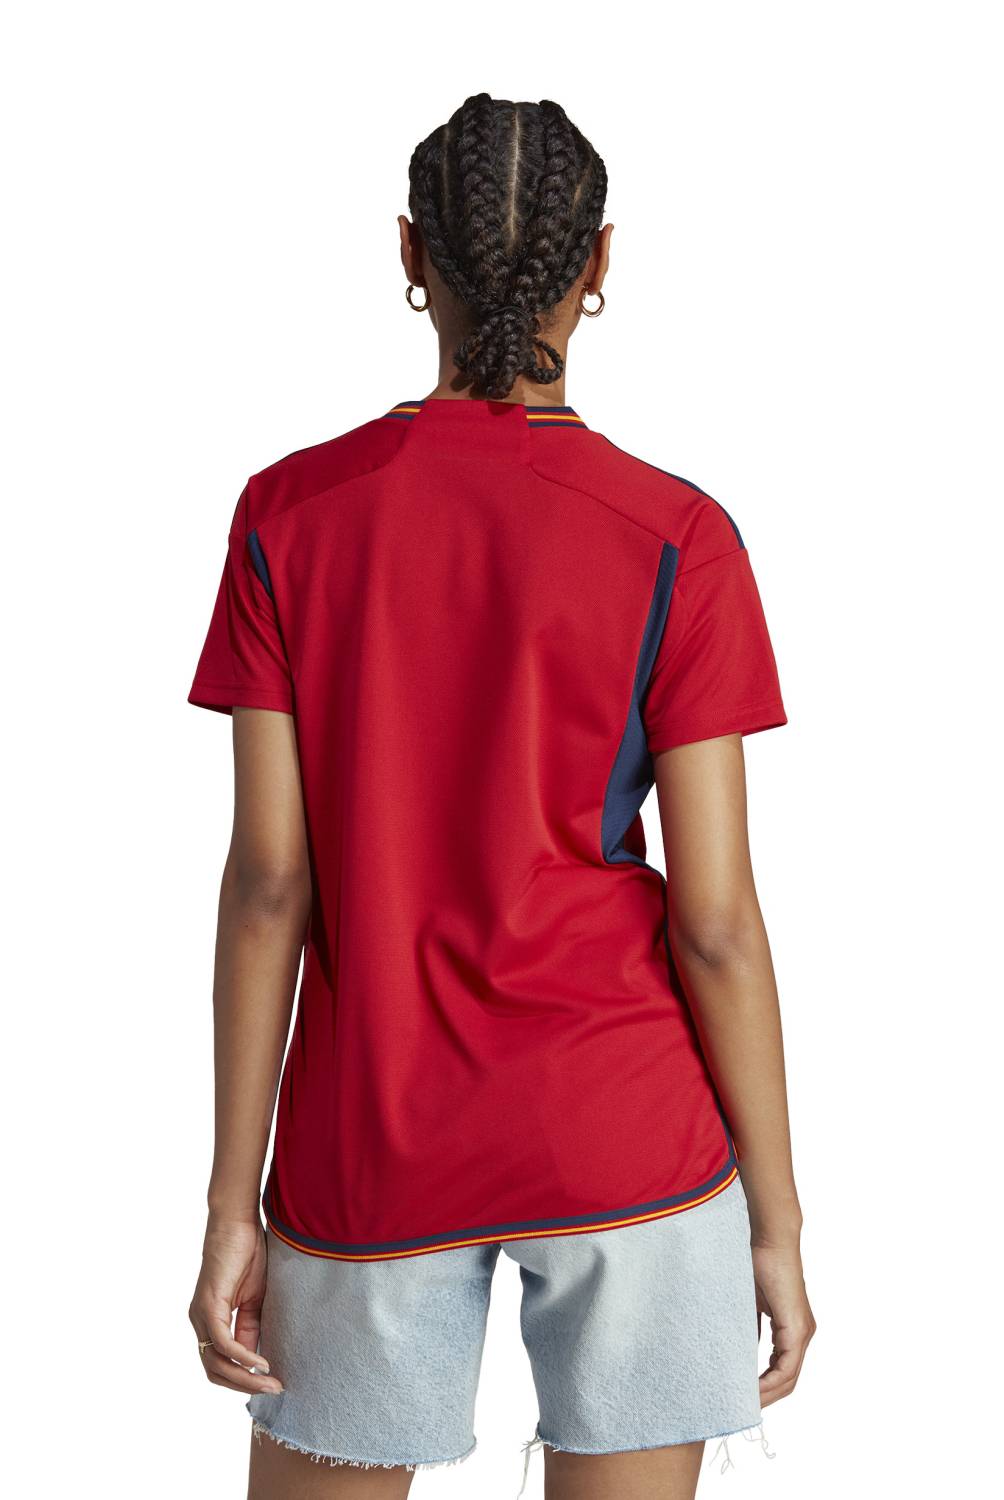 ADIDAS - Camiseta De Fútbol España Local  Mujer Adidas